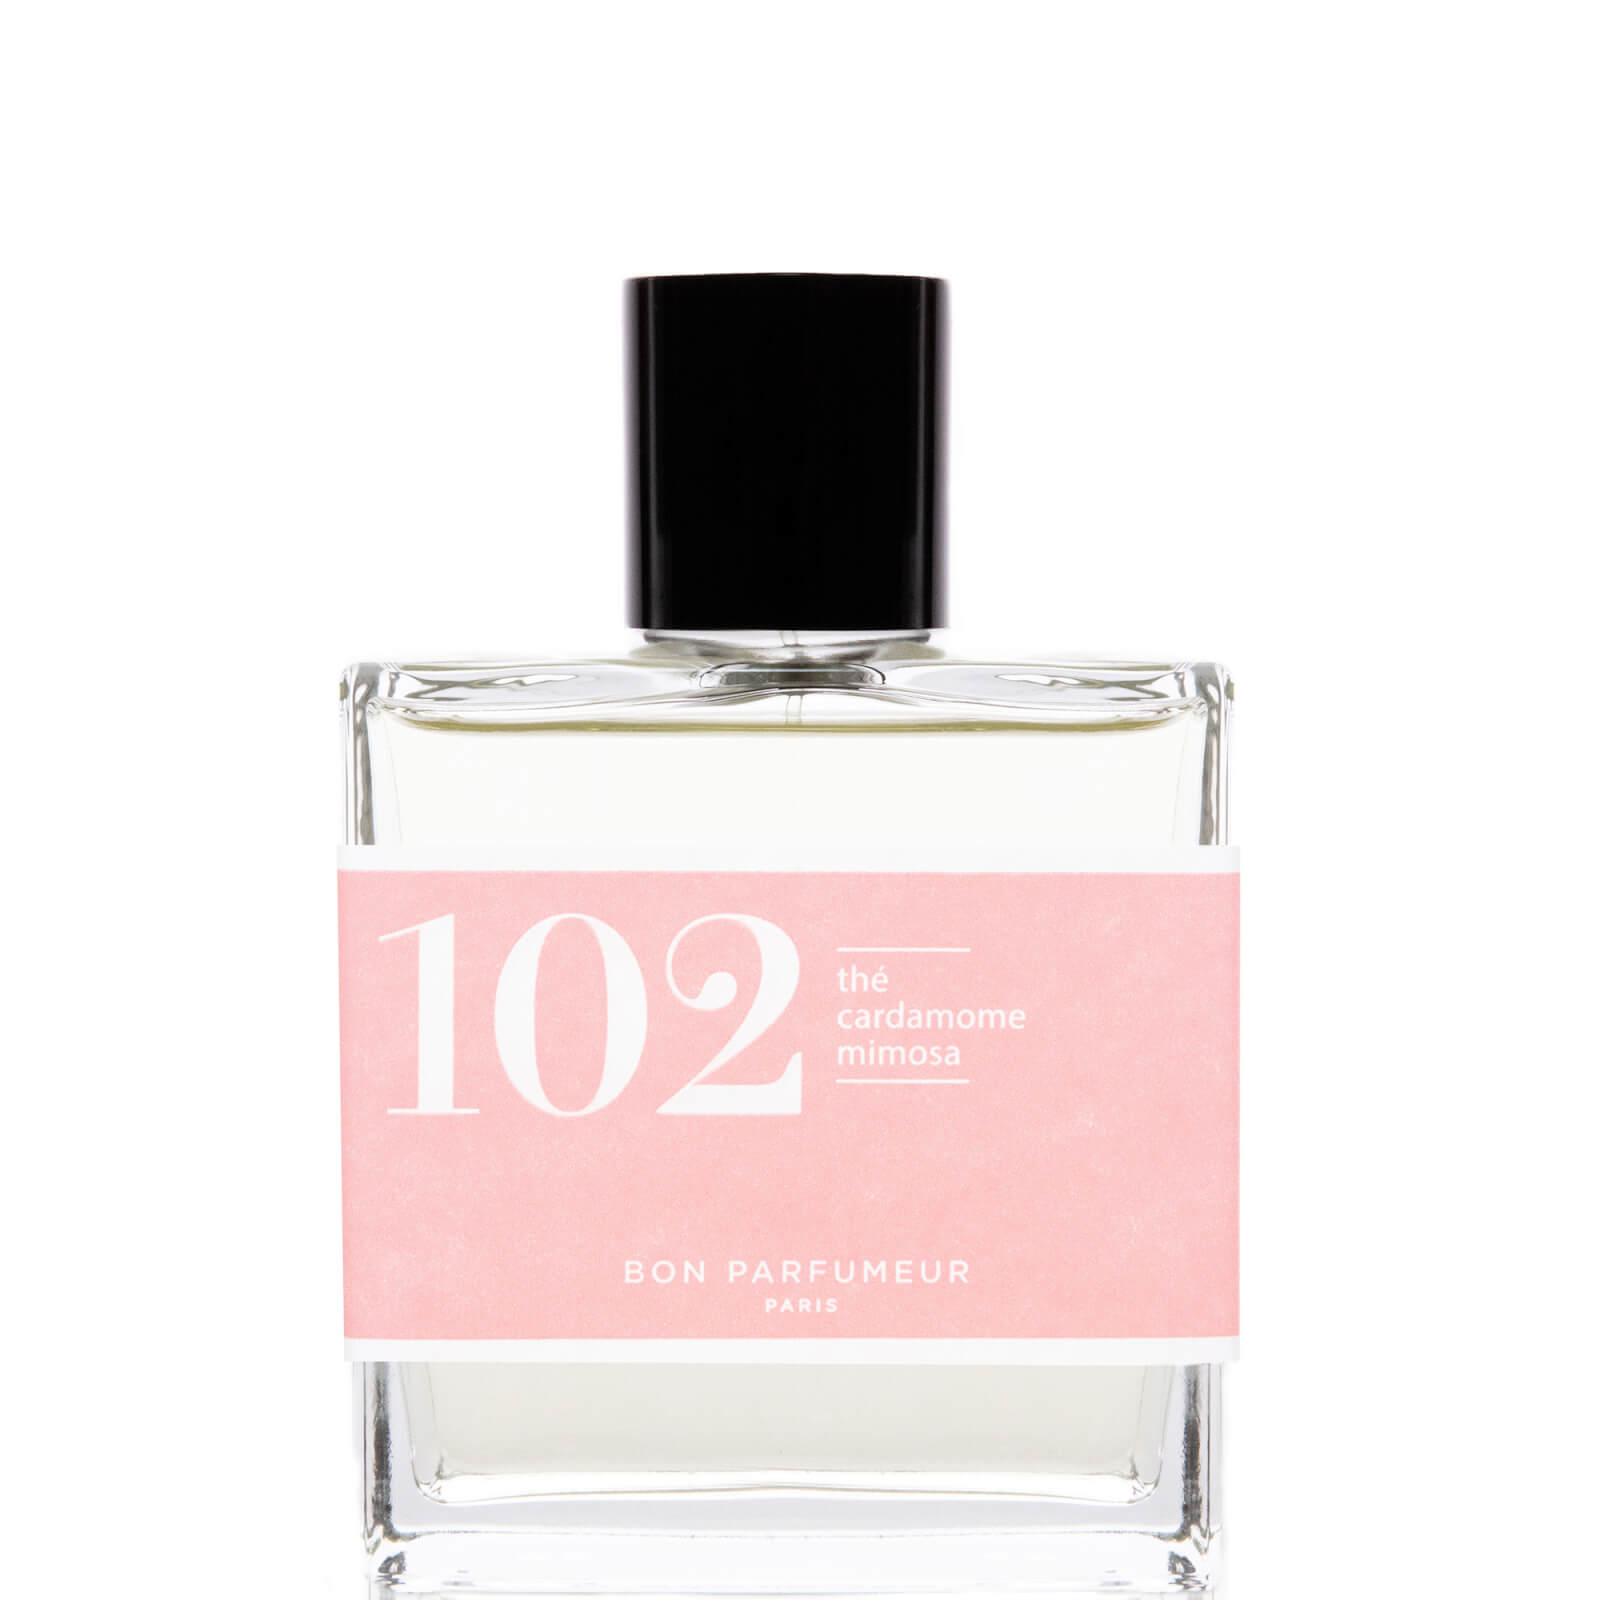 bon-parfumeur-102-thee-kardemom-mimosa-eau-de-parfum-100ml